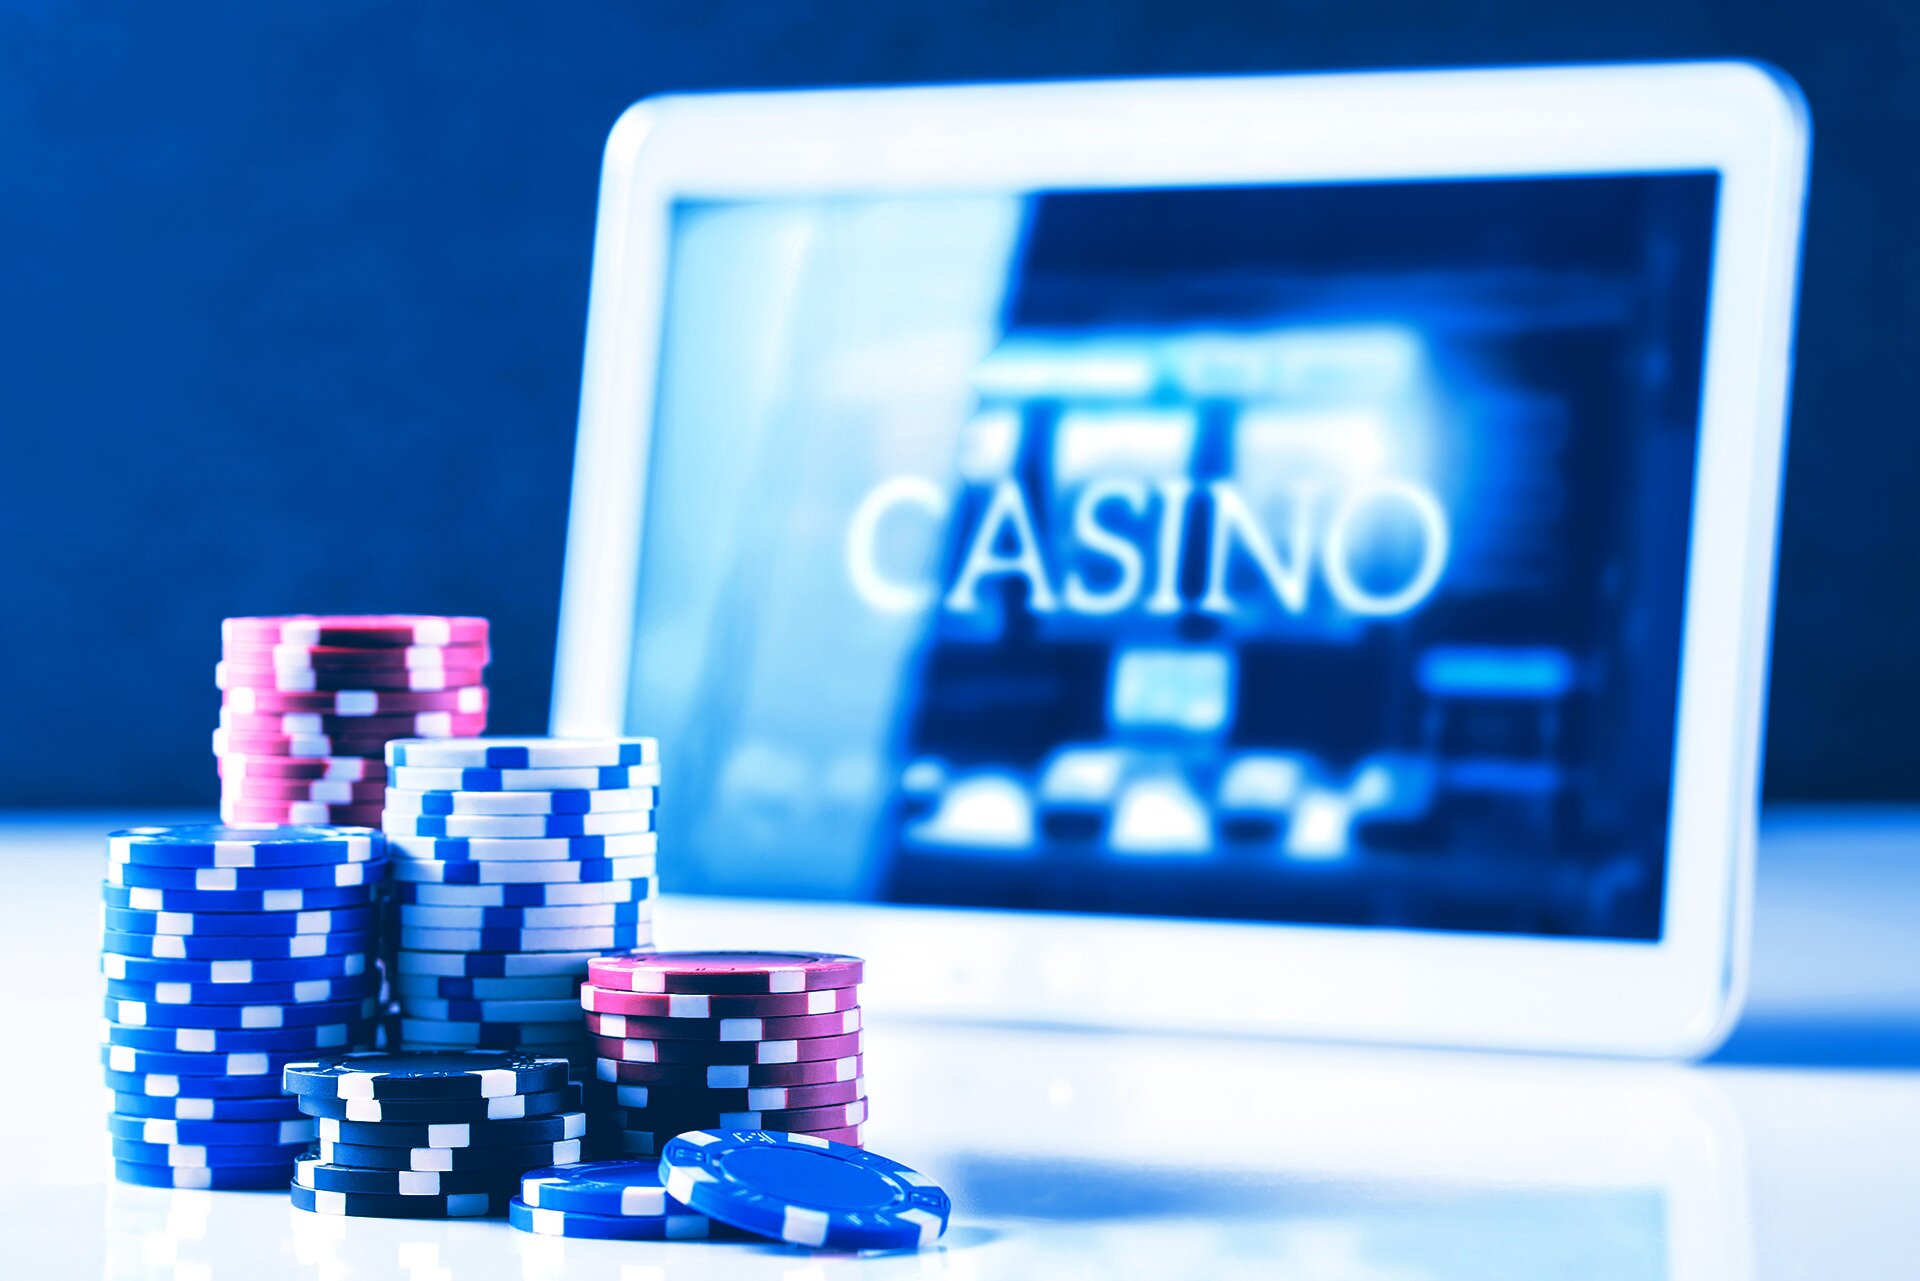 Australian Online Gambling Review Targets Sites